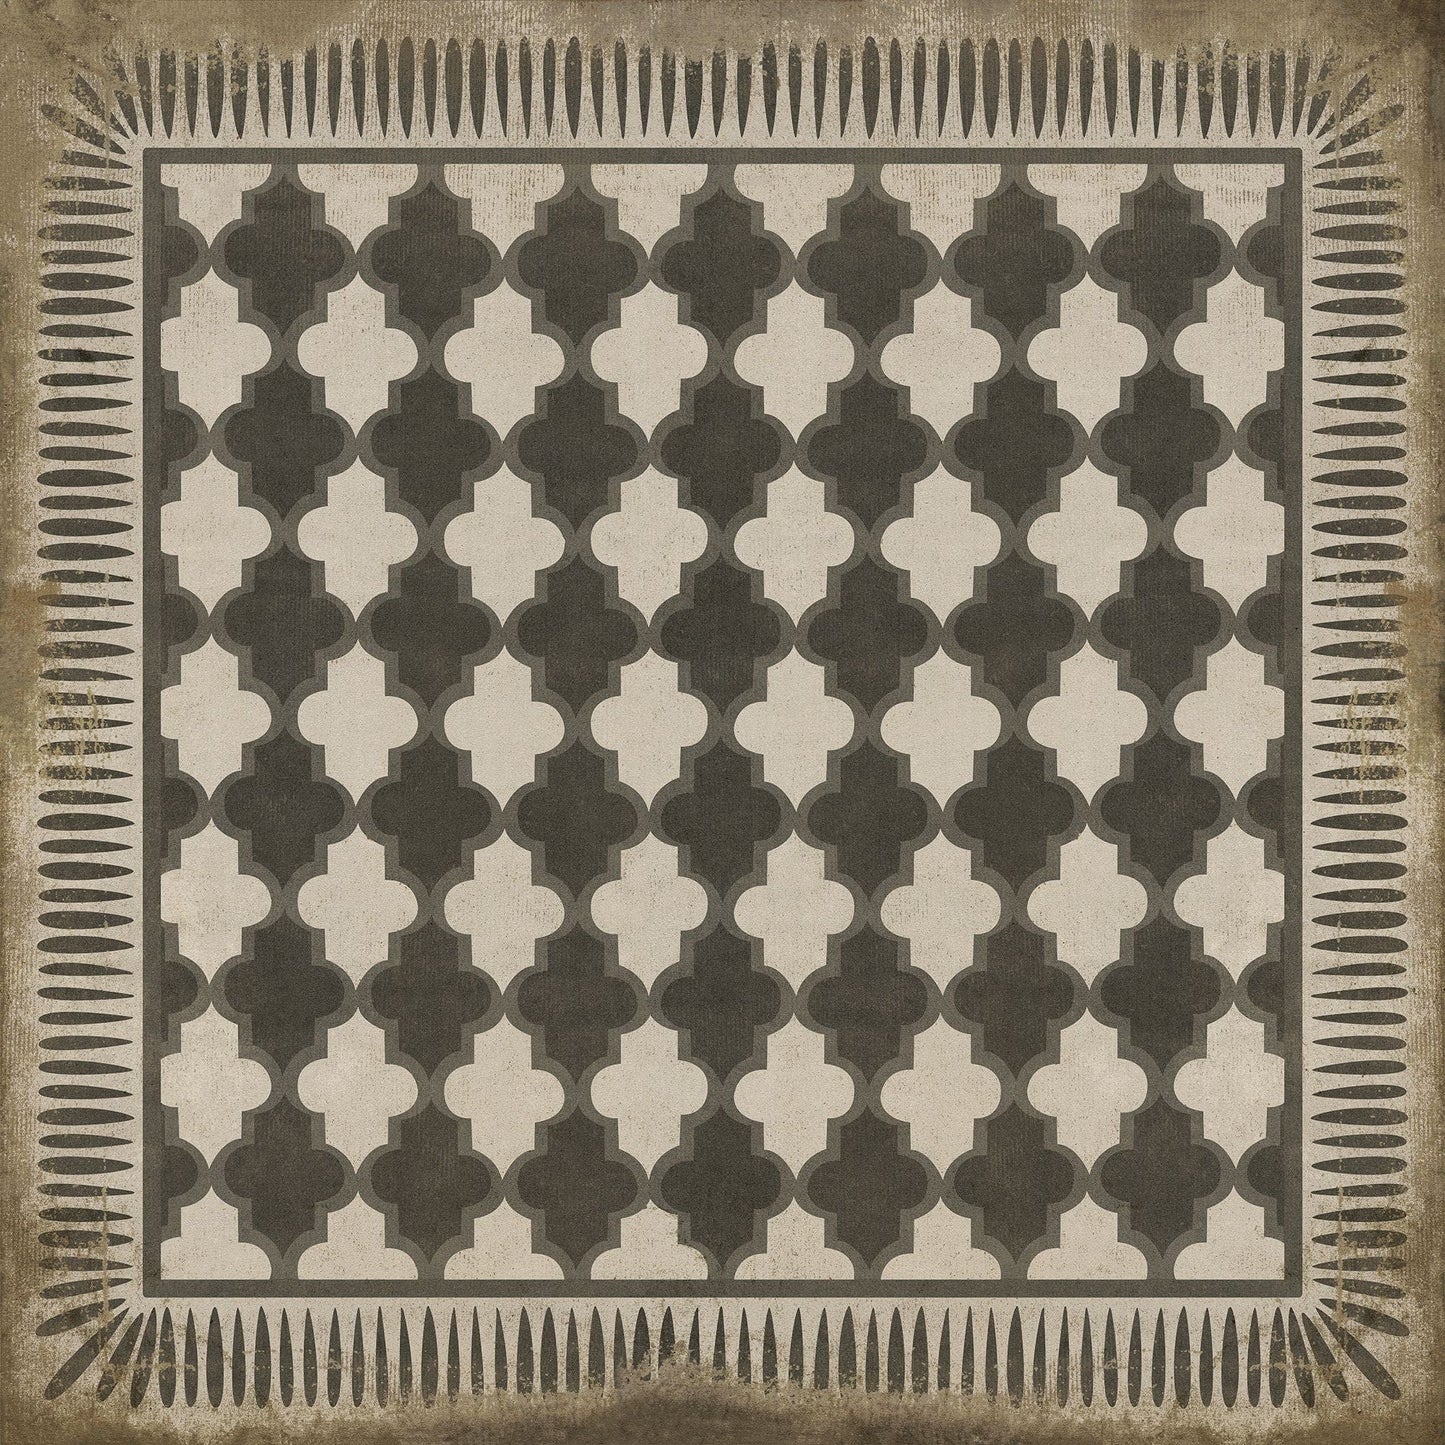 Pattern 10